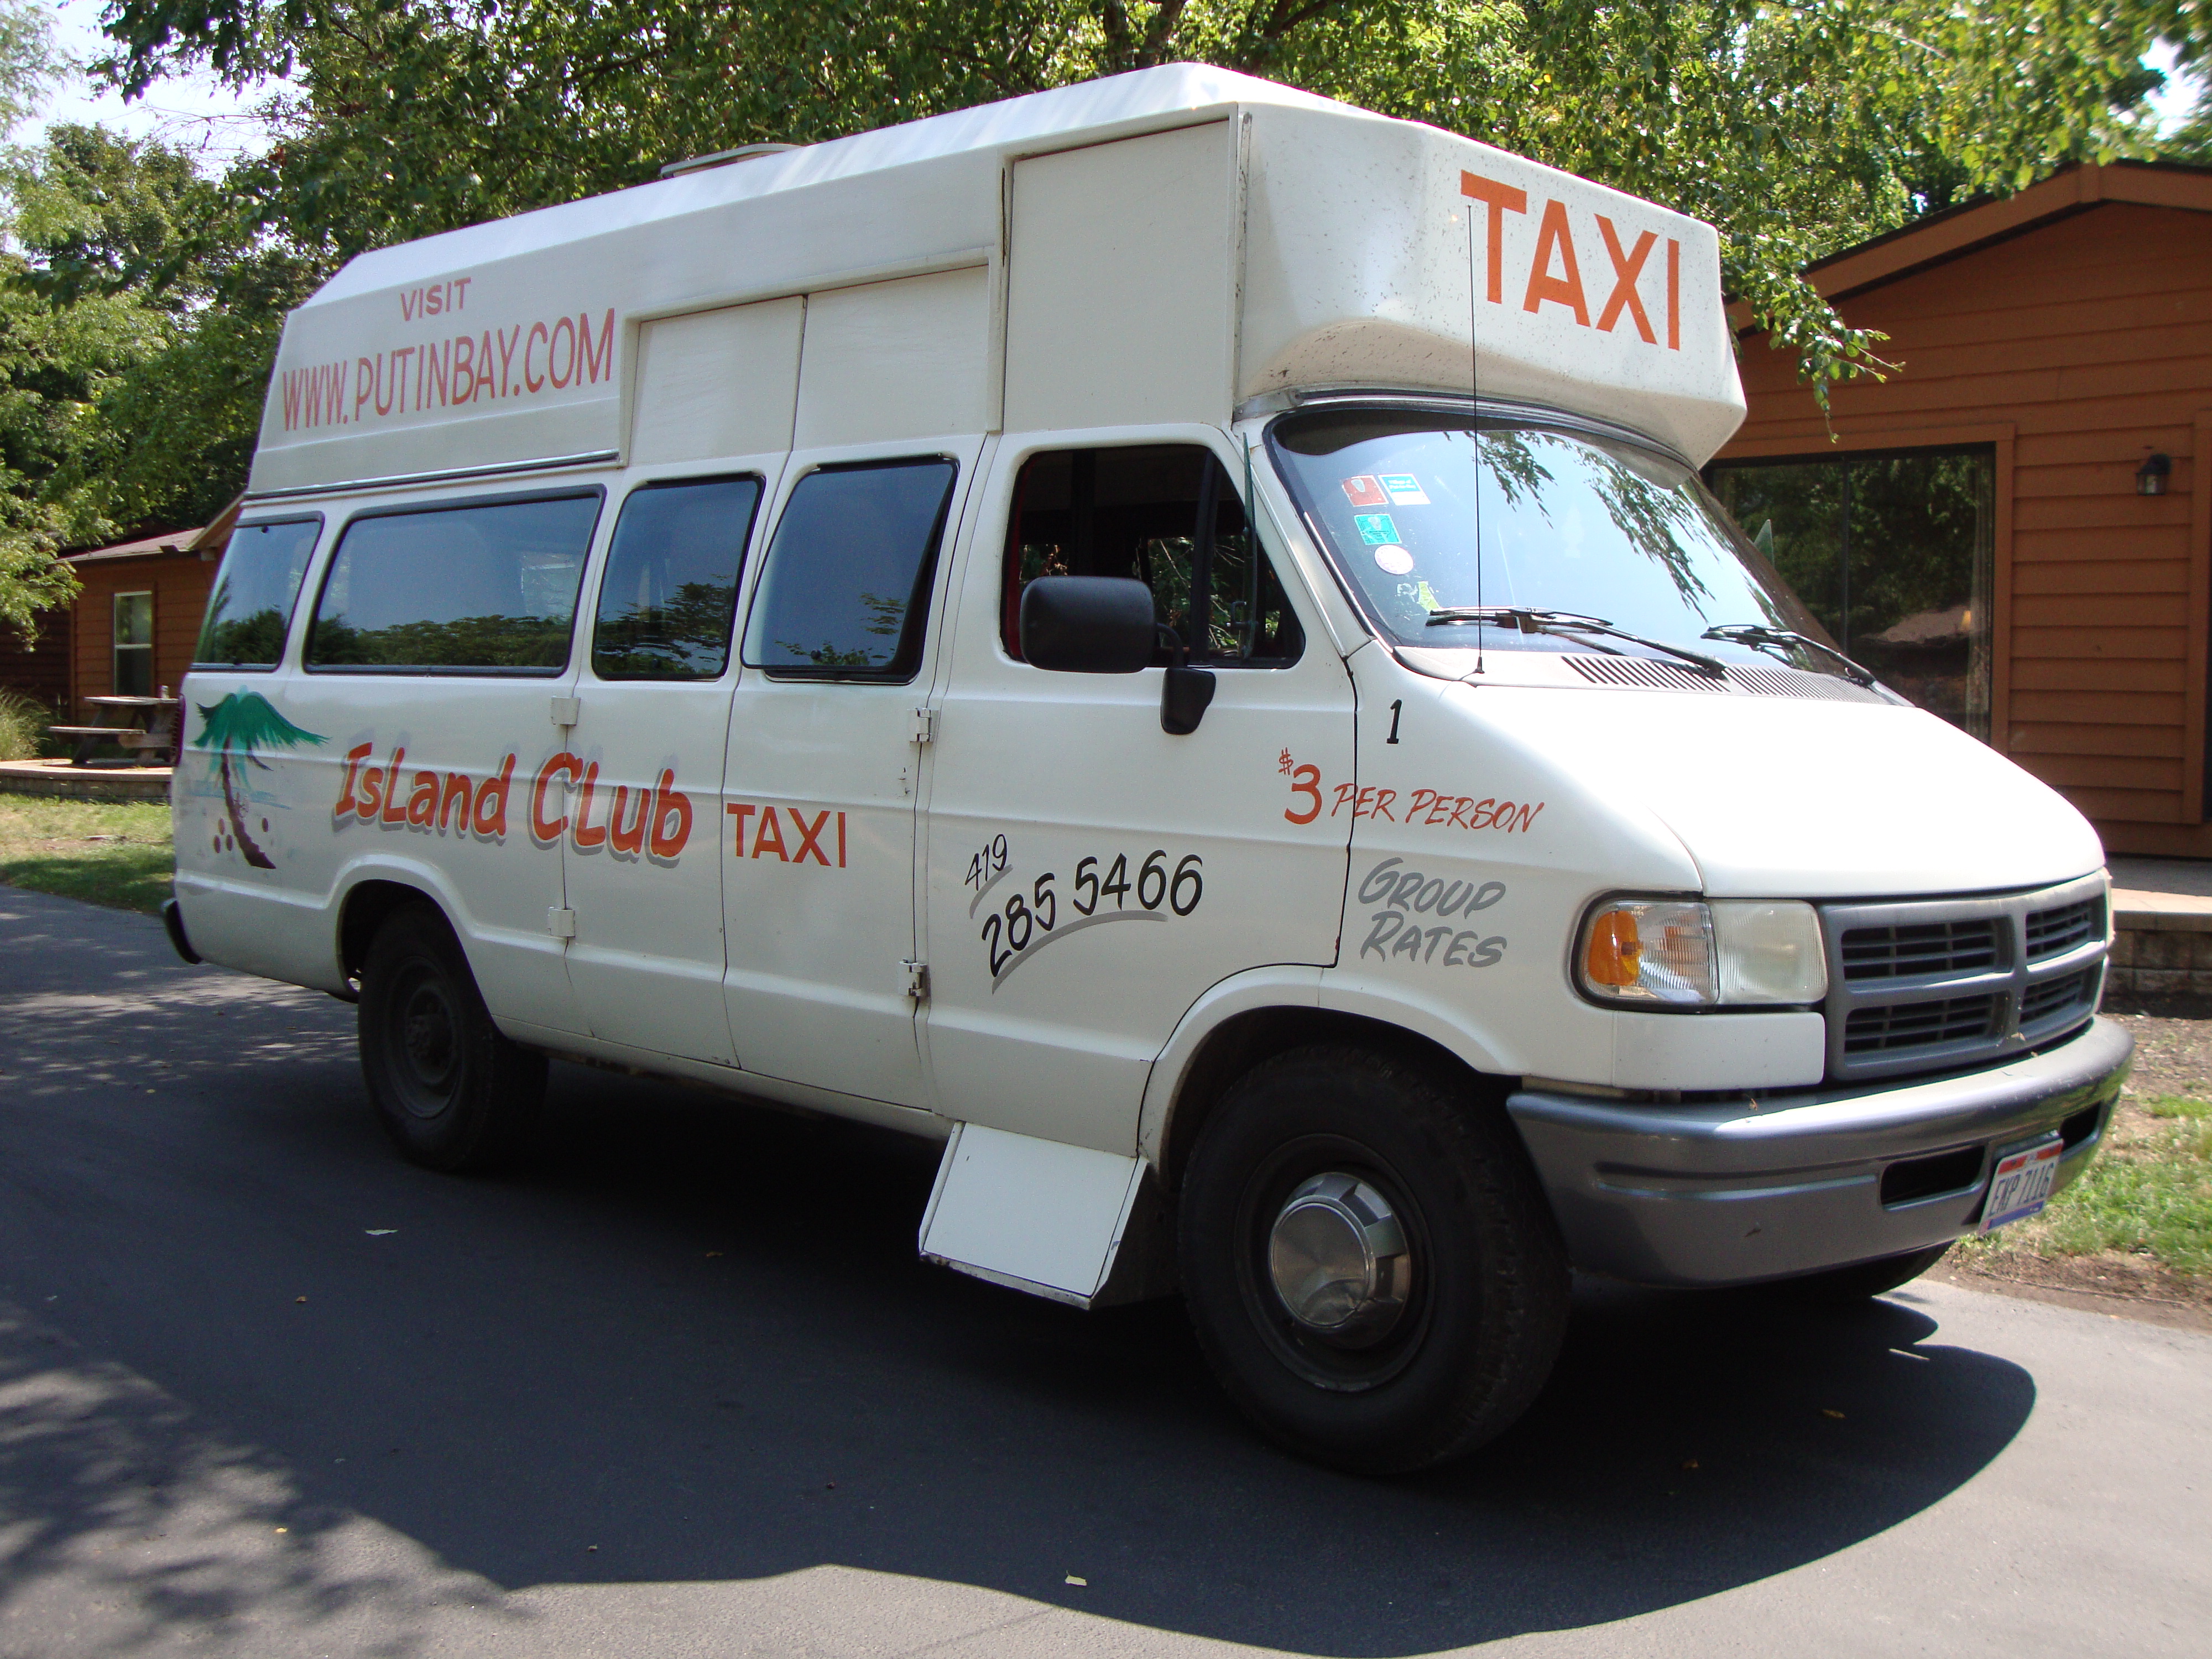 Island Club Taxi Service Put In Bay